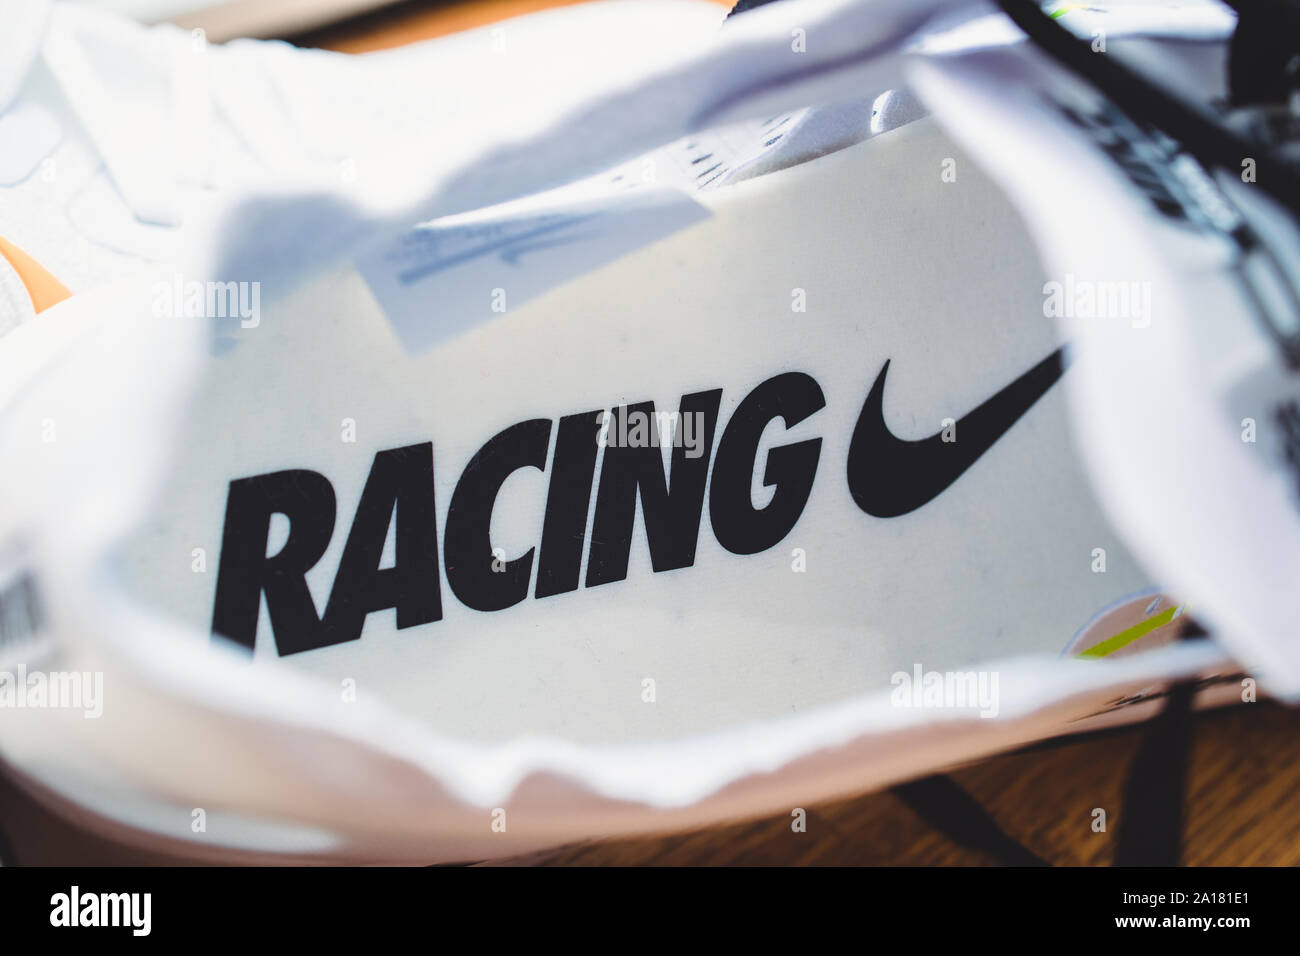 Paris, France - Jul 8, 2019: close-up macro shot of new professional Nike  running sport shoe